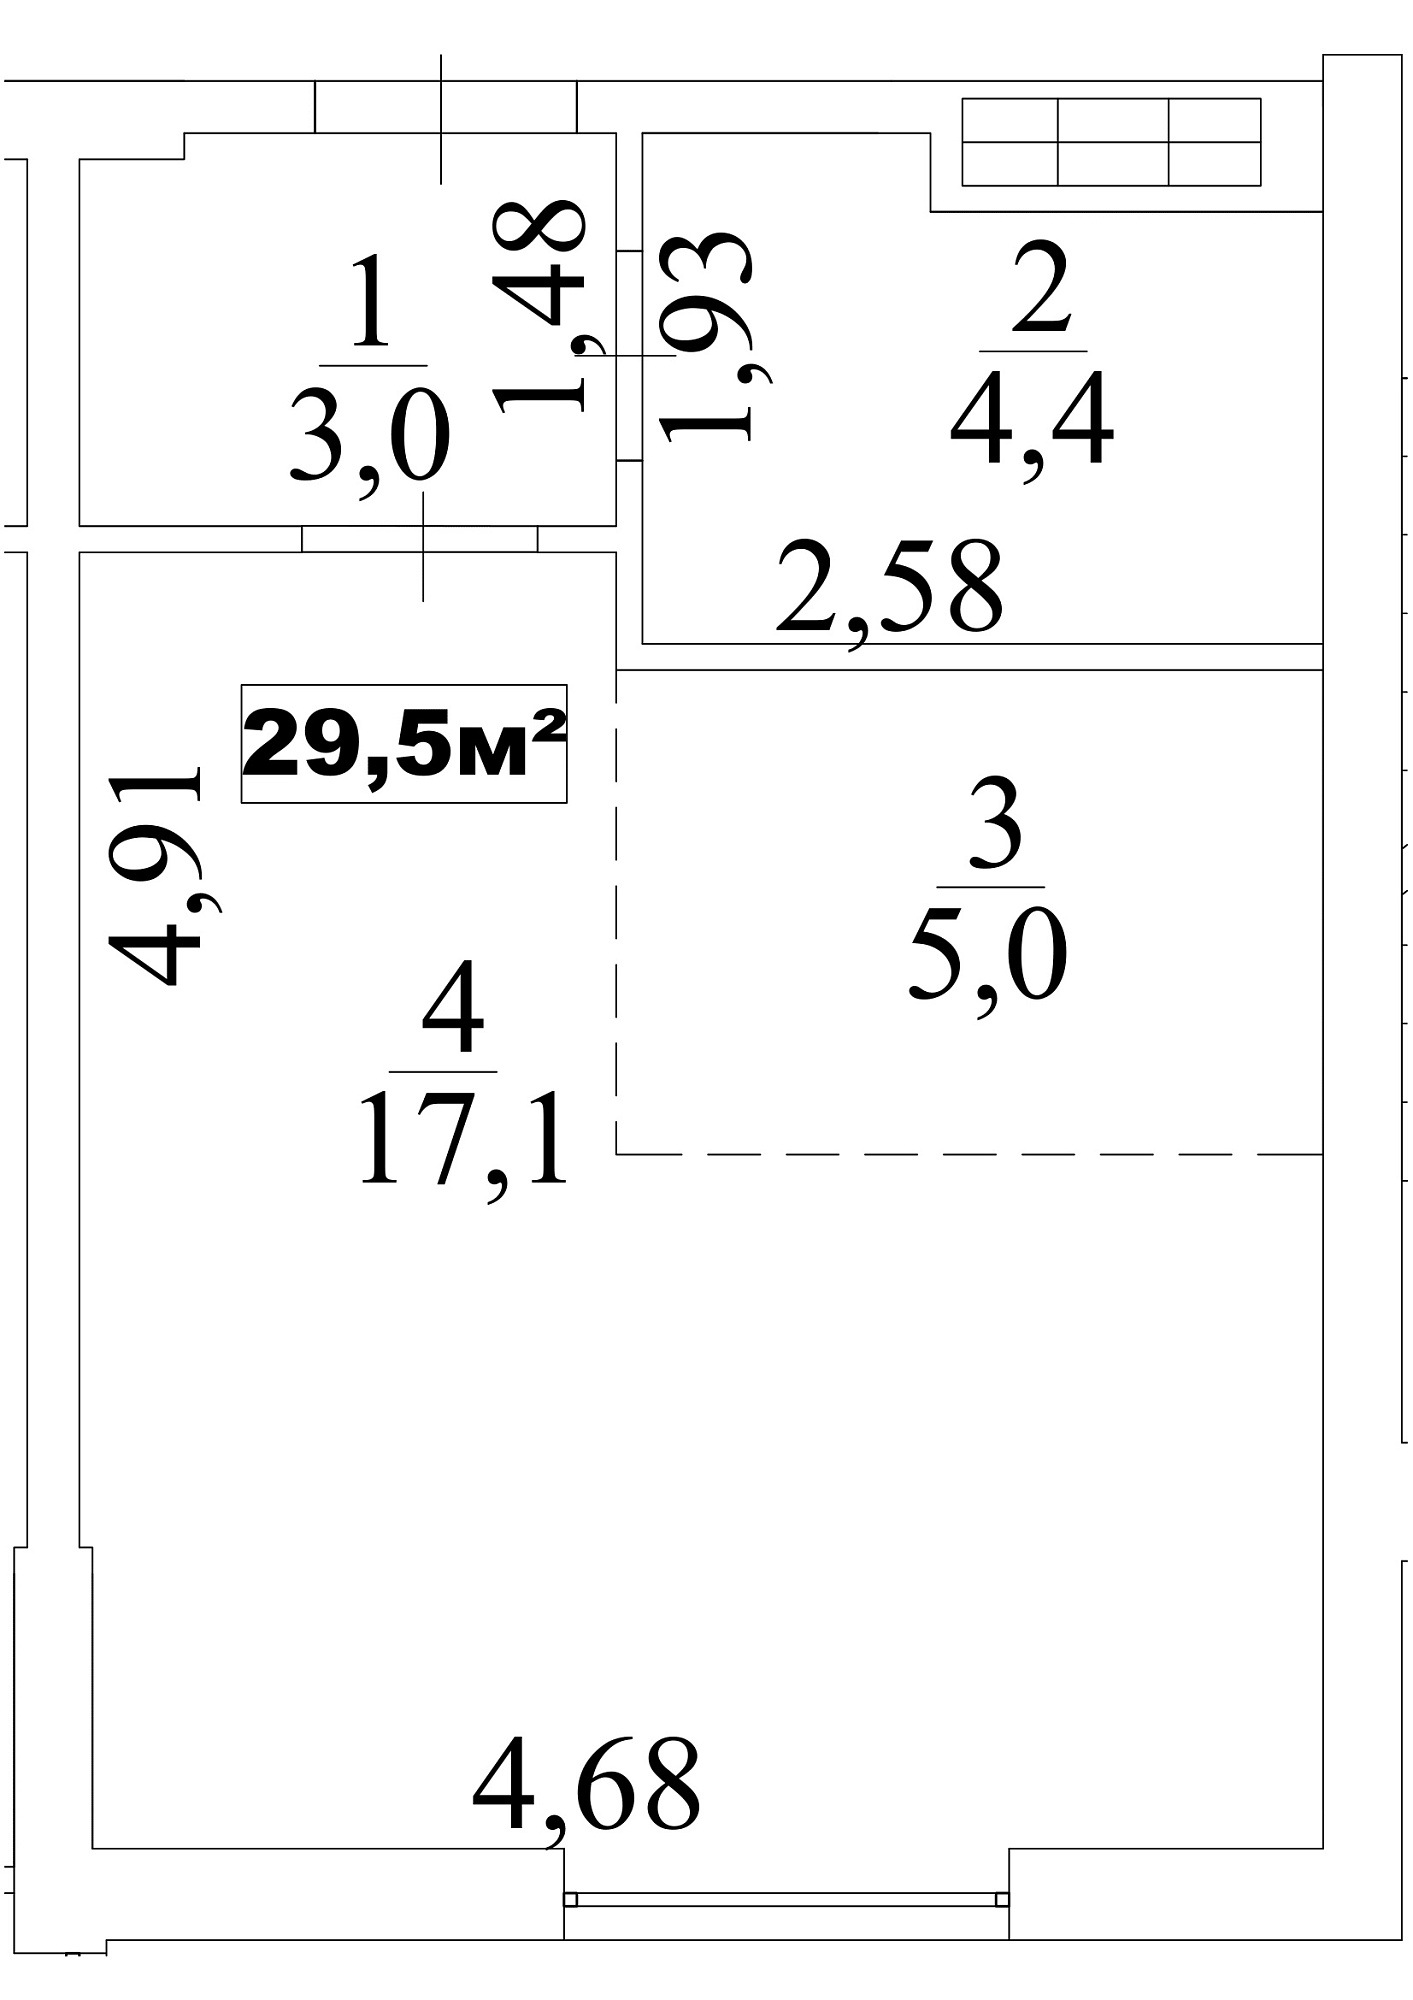 Planning Smart flats area 29.5m2, AB-10-03/0019а.